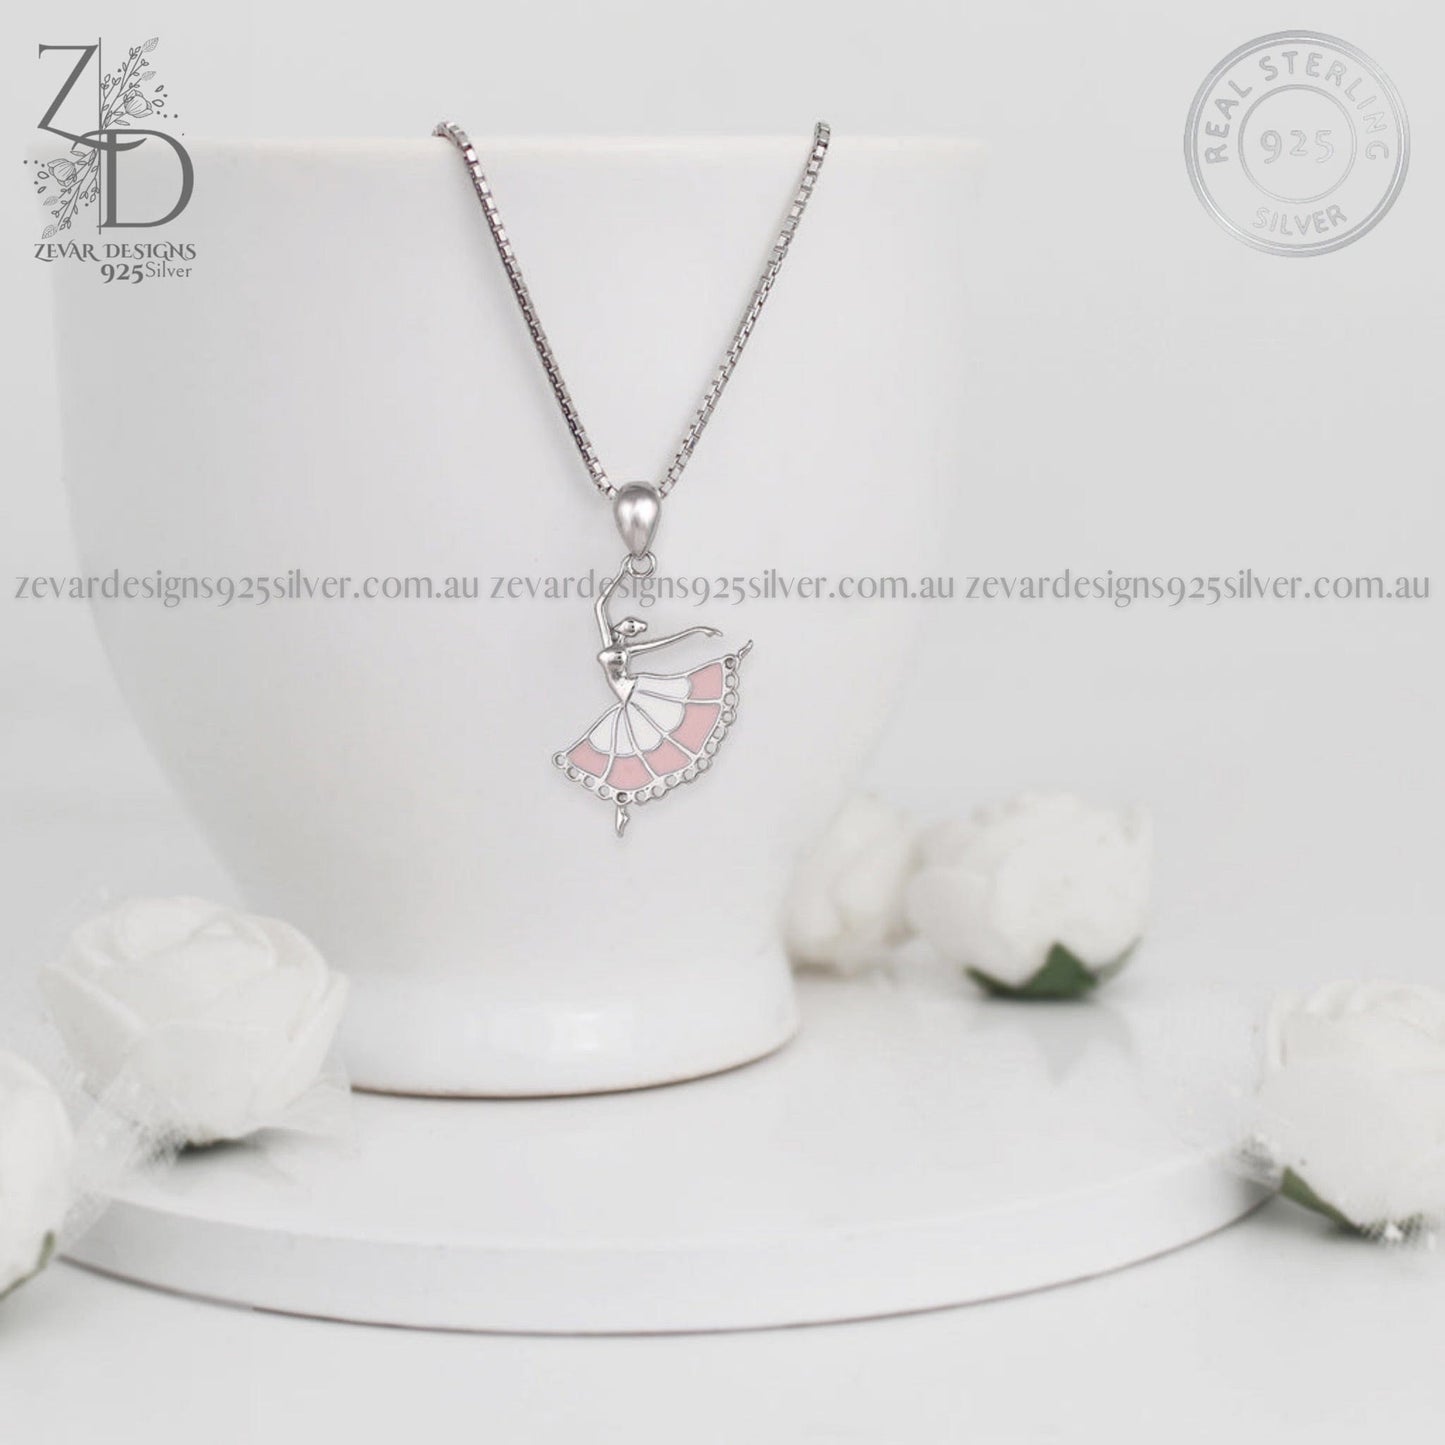 Zevar Designs 925 Silver Necklaces-Pendants Dancing Girl Pendant with Chain